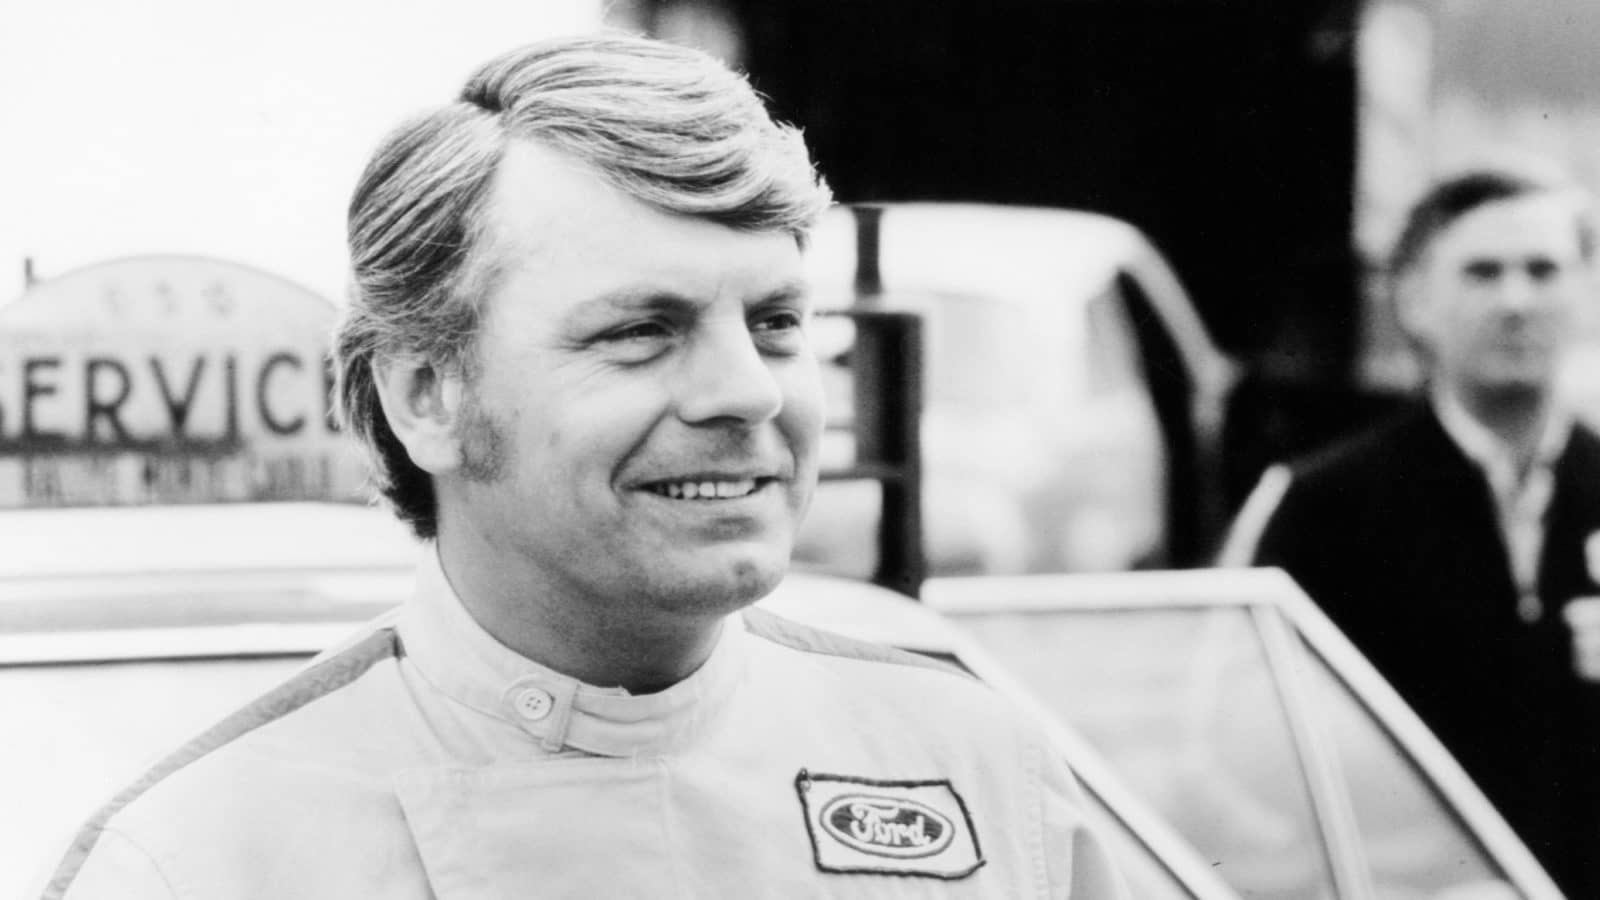 Rally driver Roger Clark portrait